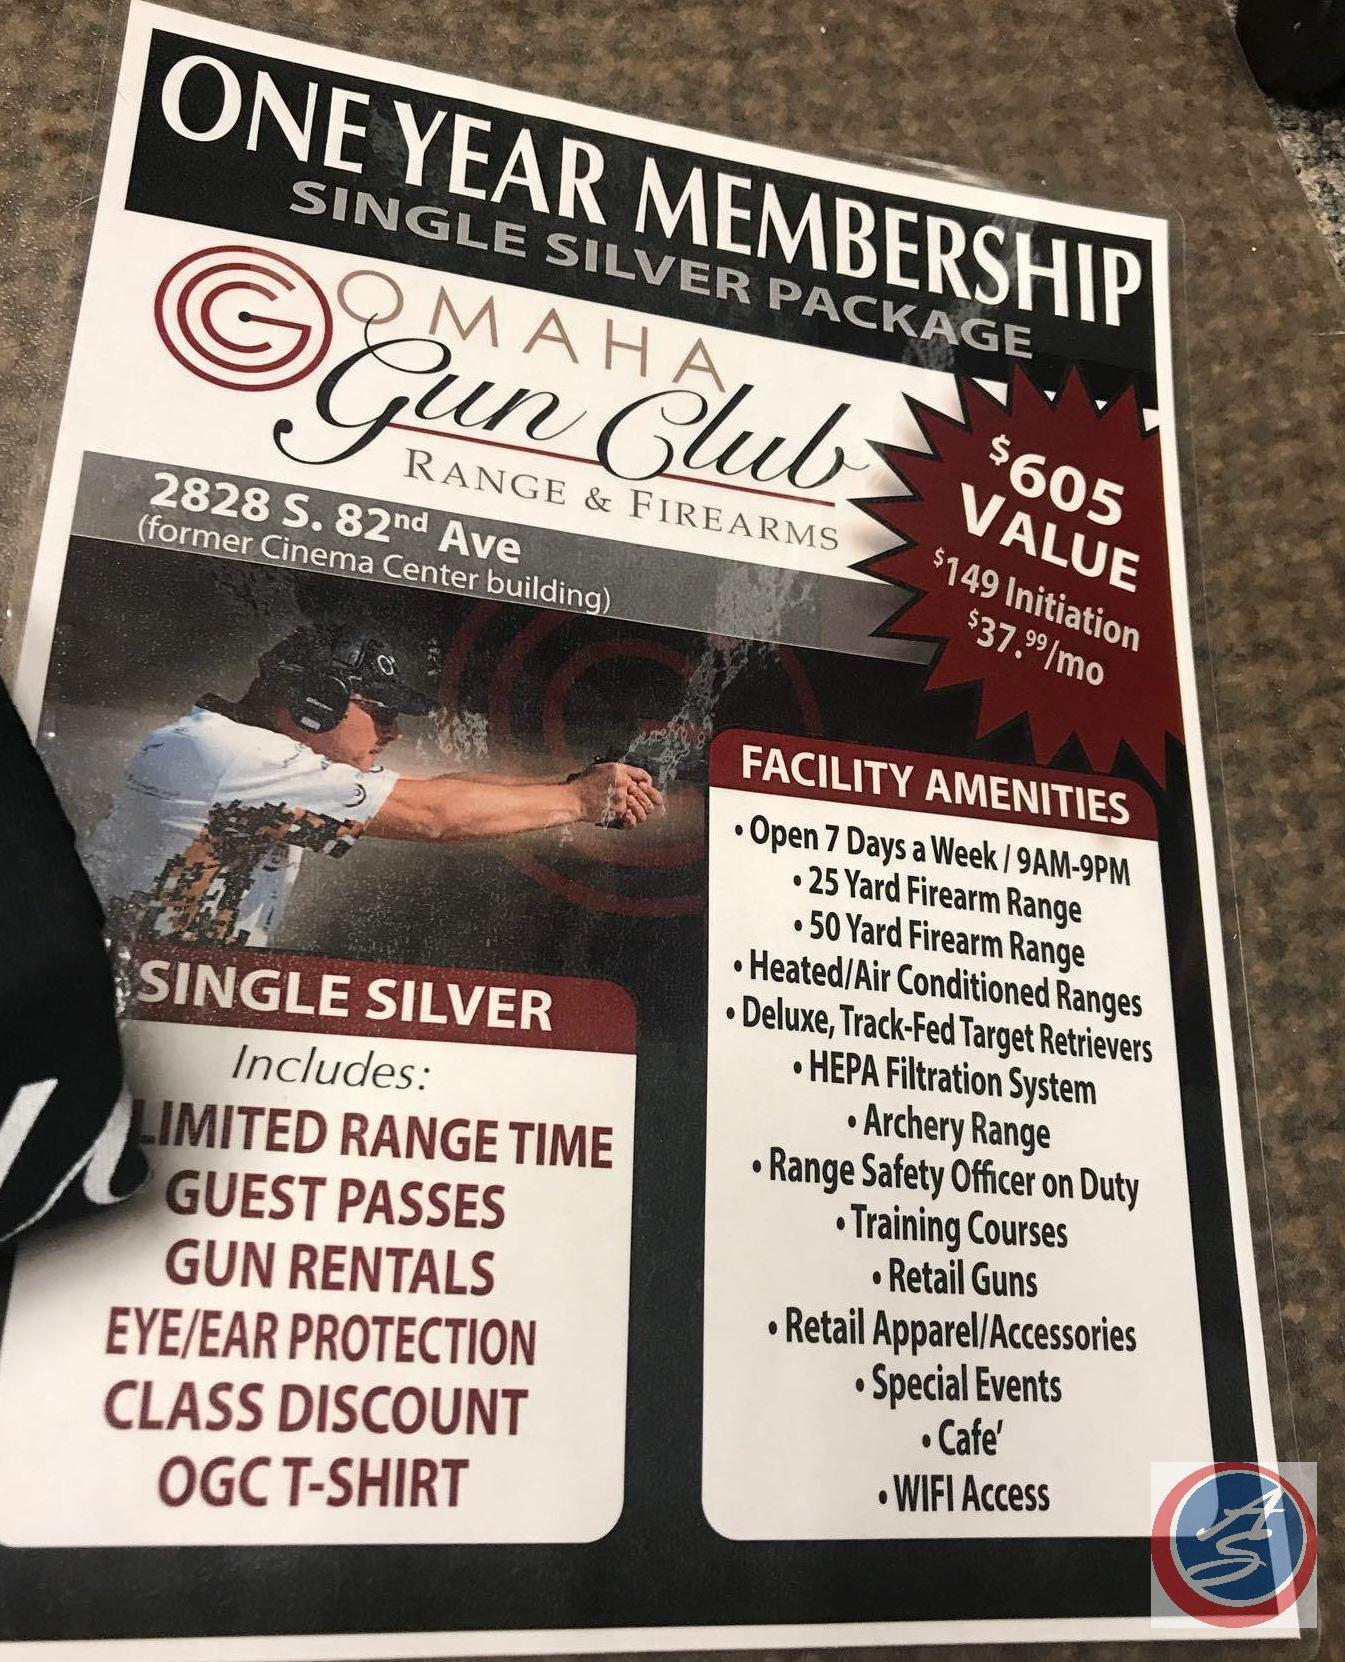 Omaha Gun Club 1 Year Silver Membership